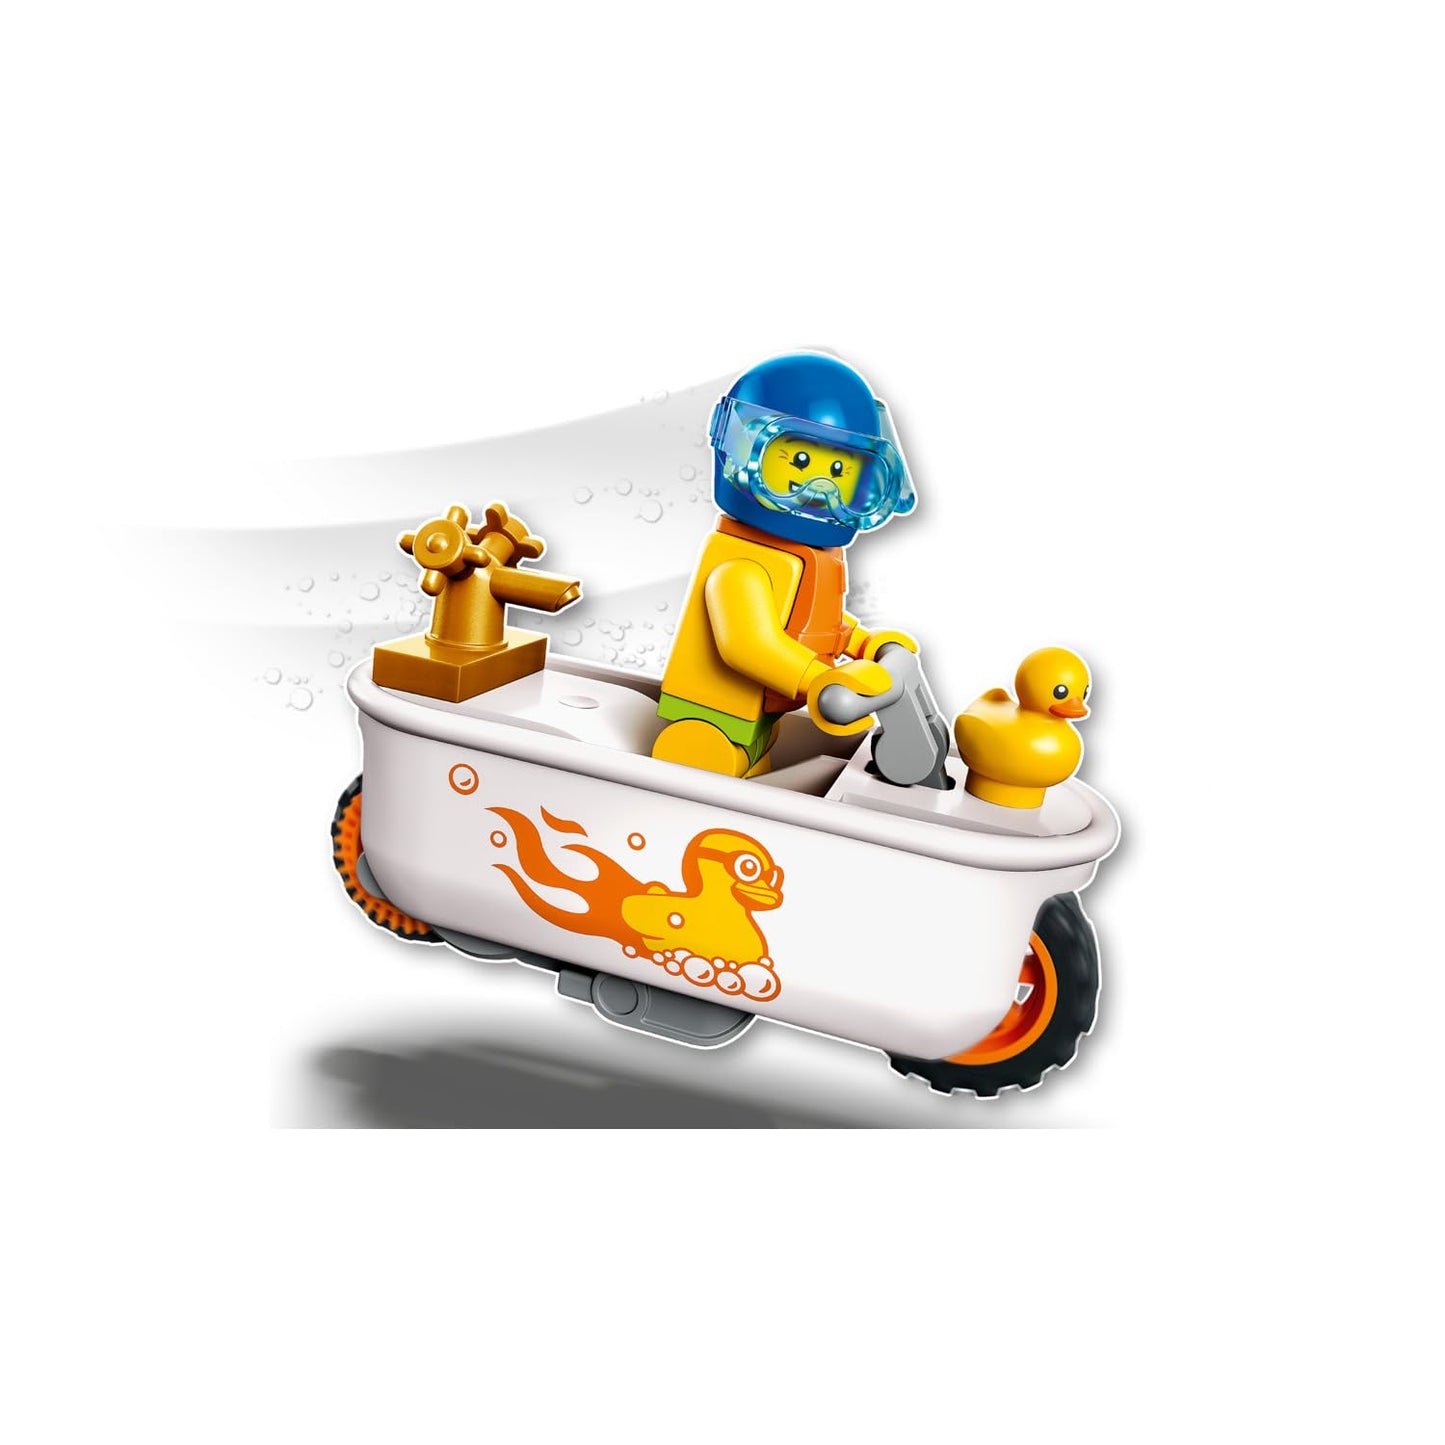 Lego 60333 City Bathtub Stunt Bike